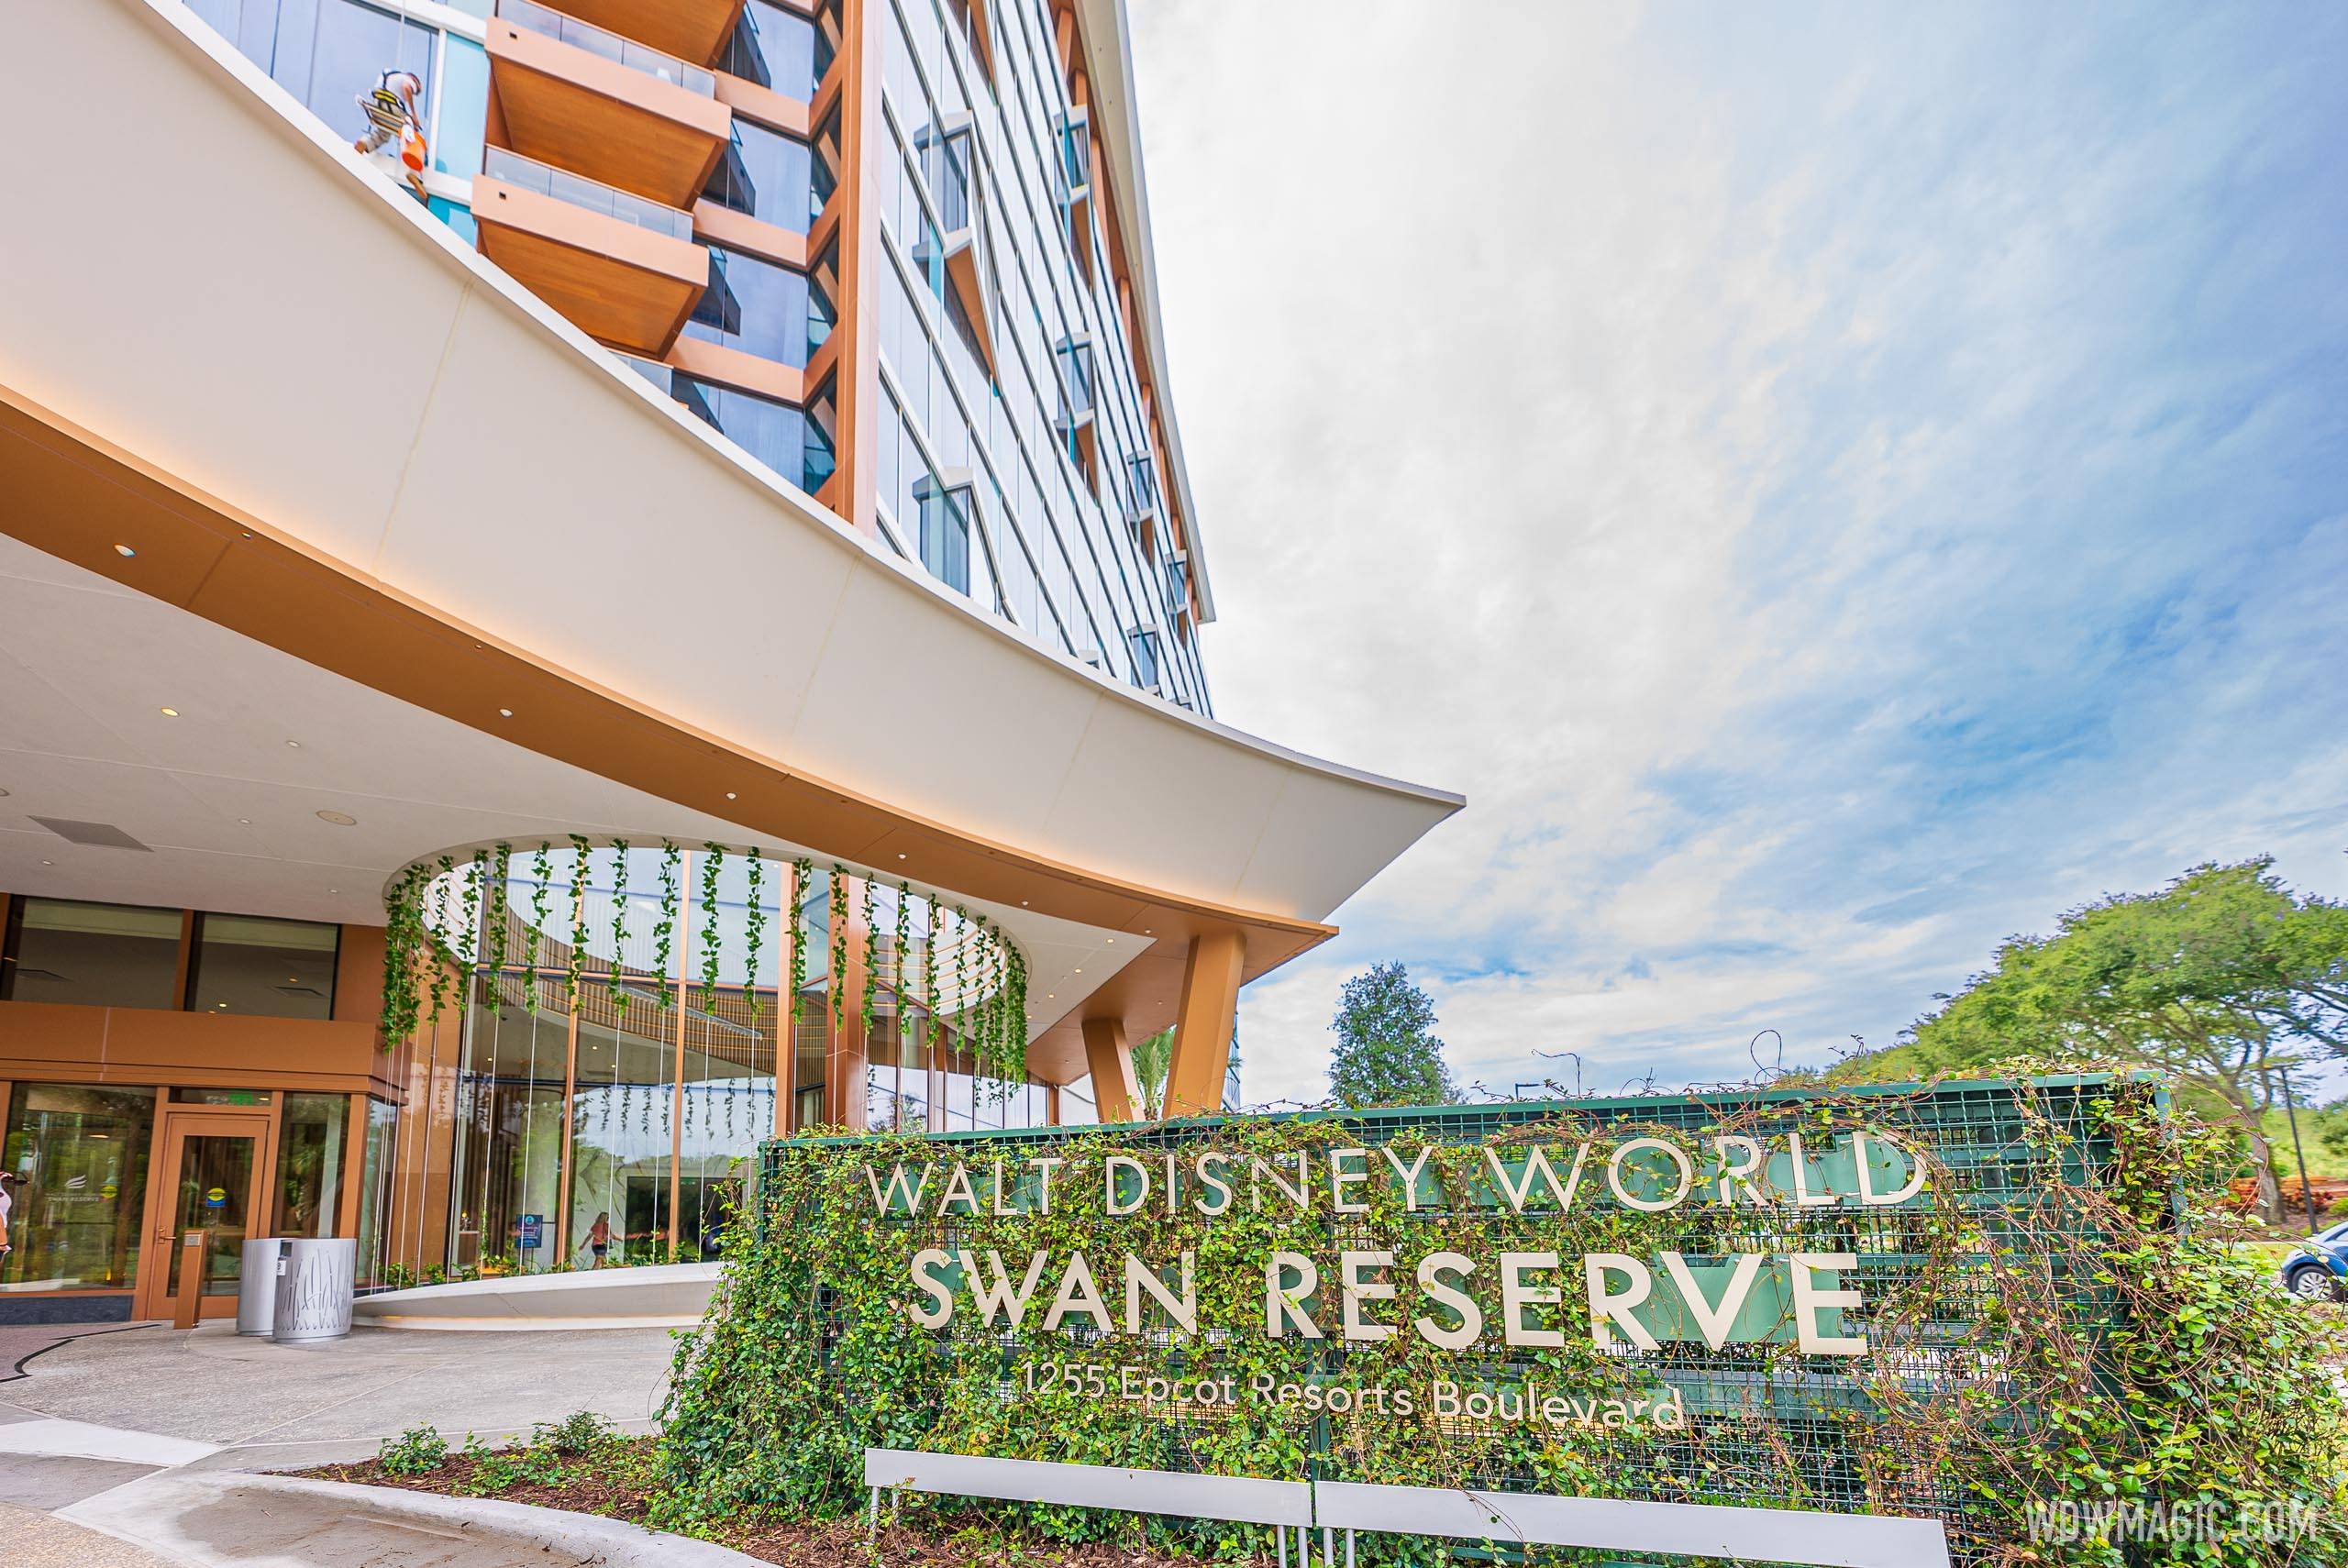 Main entrance at The Walt Disney World Swan Reserve